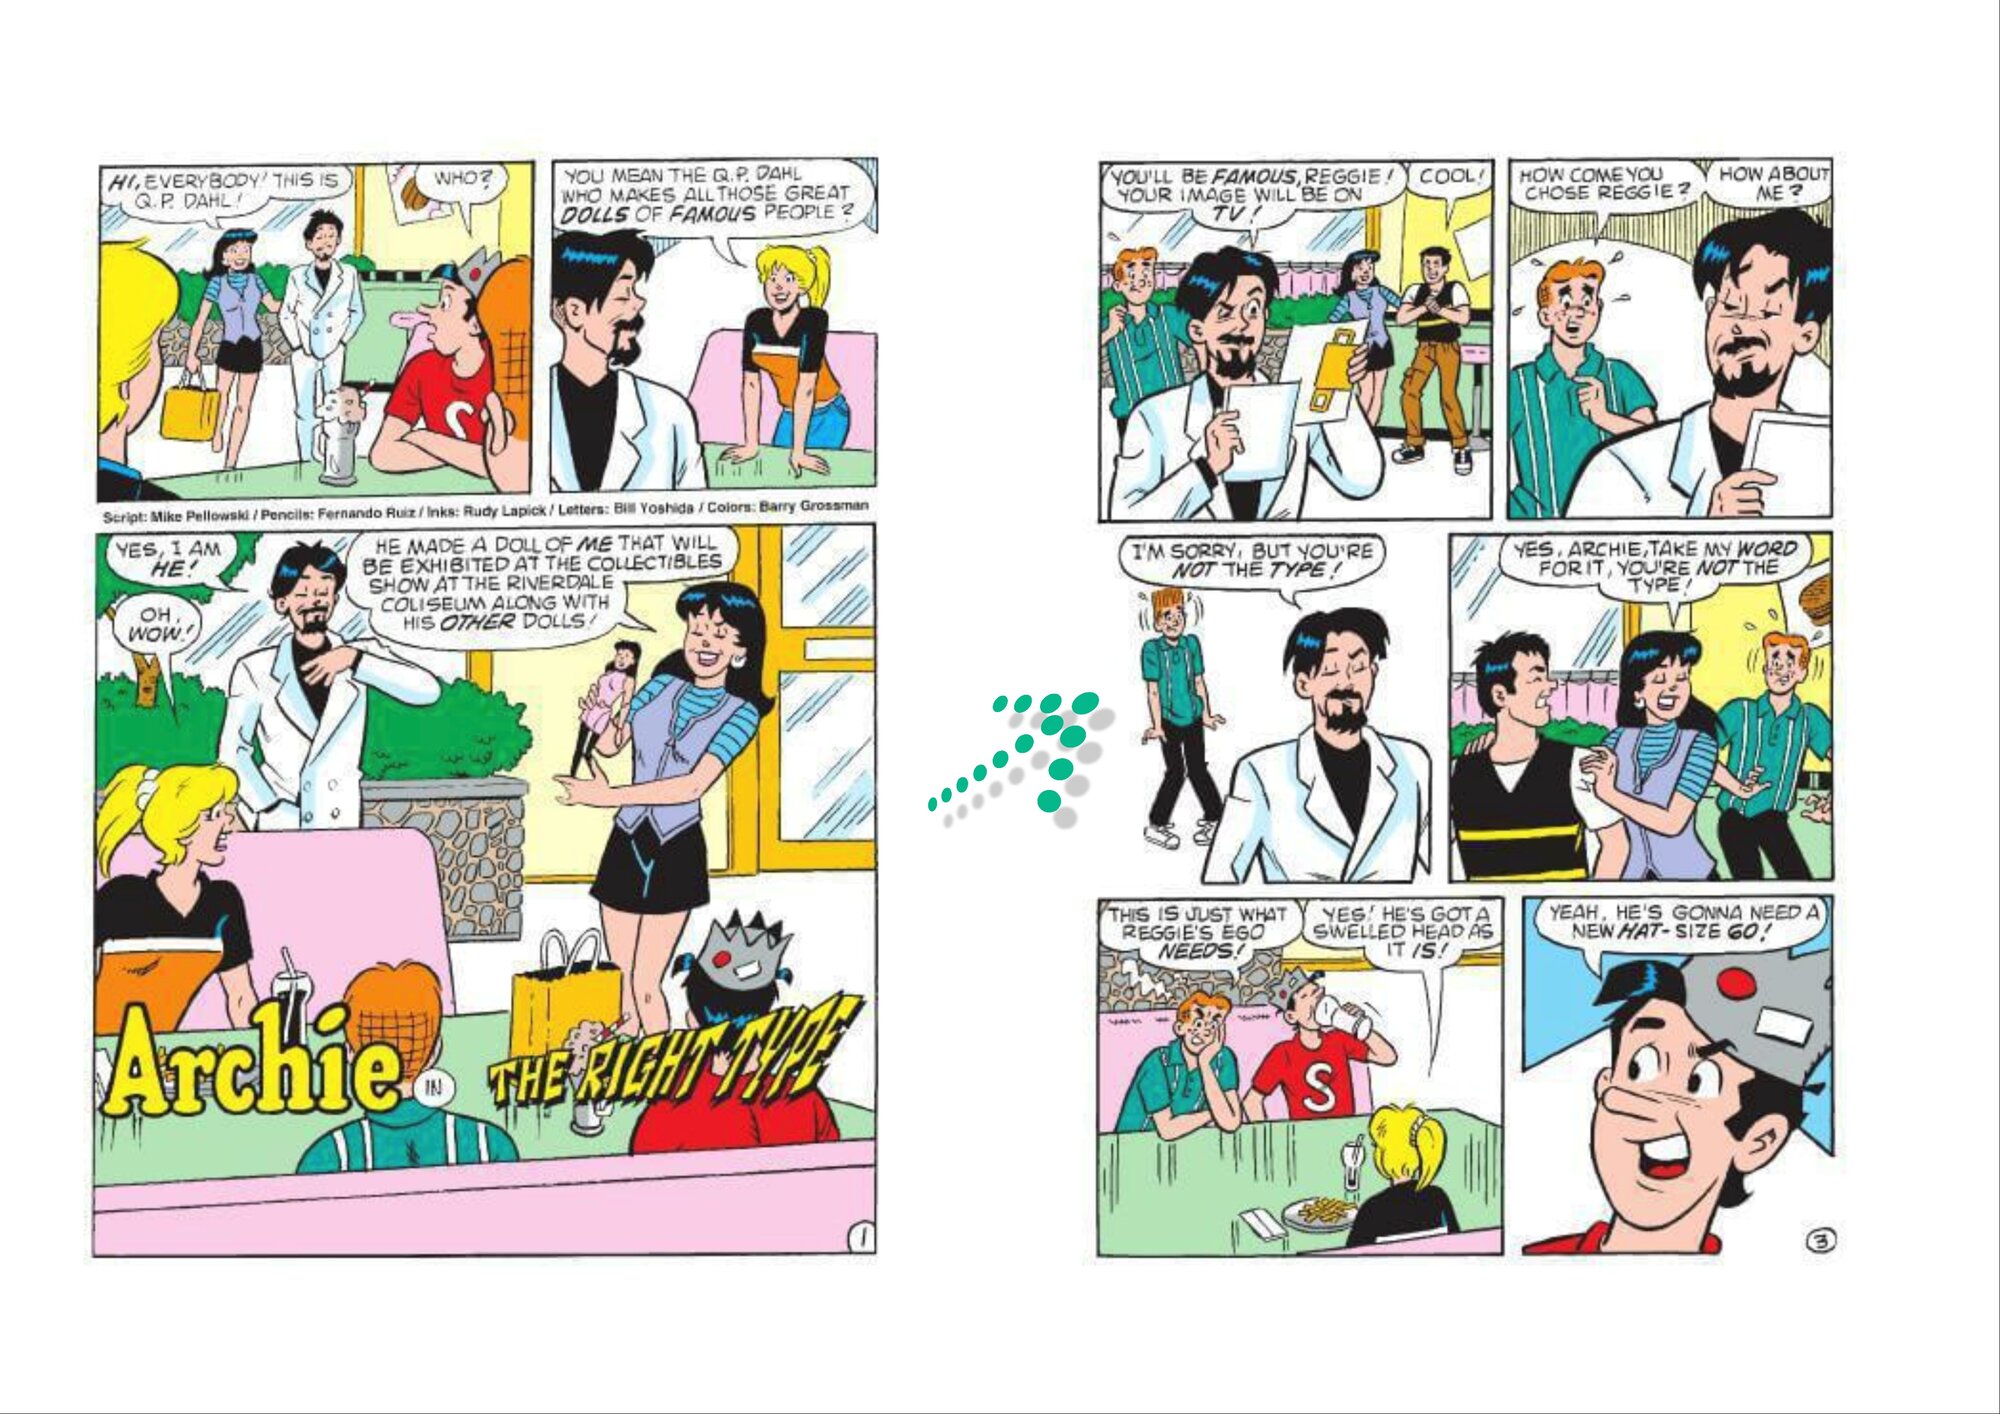 Archie comics - The Right Type - Reggie & Archie